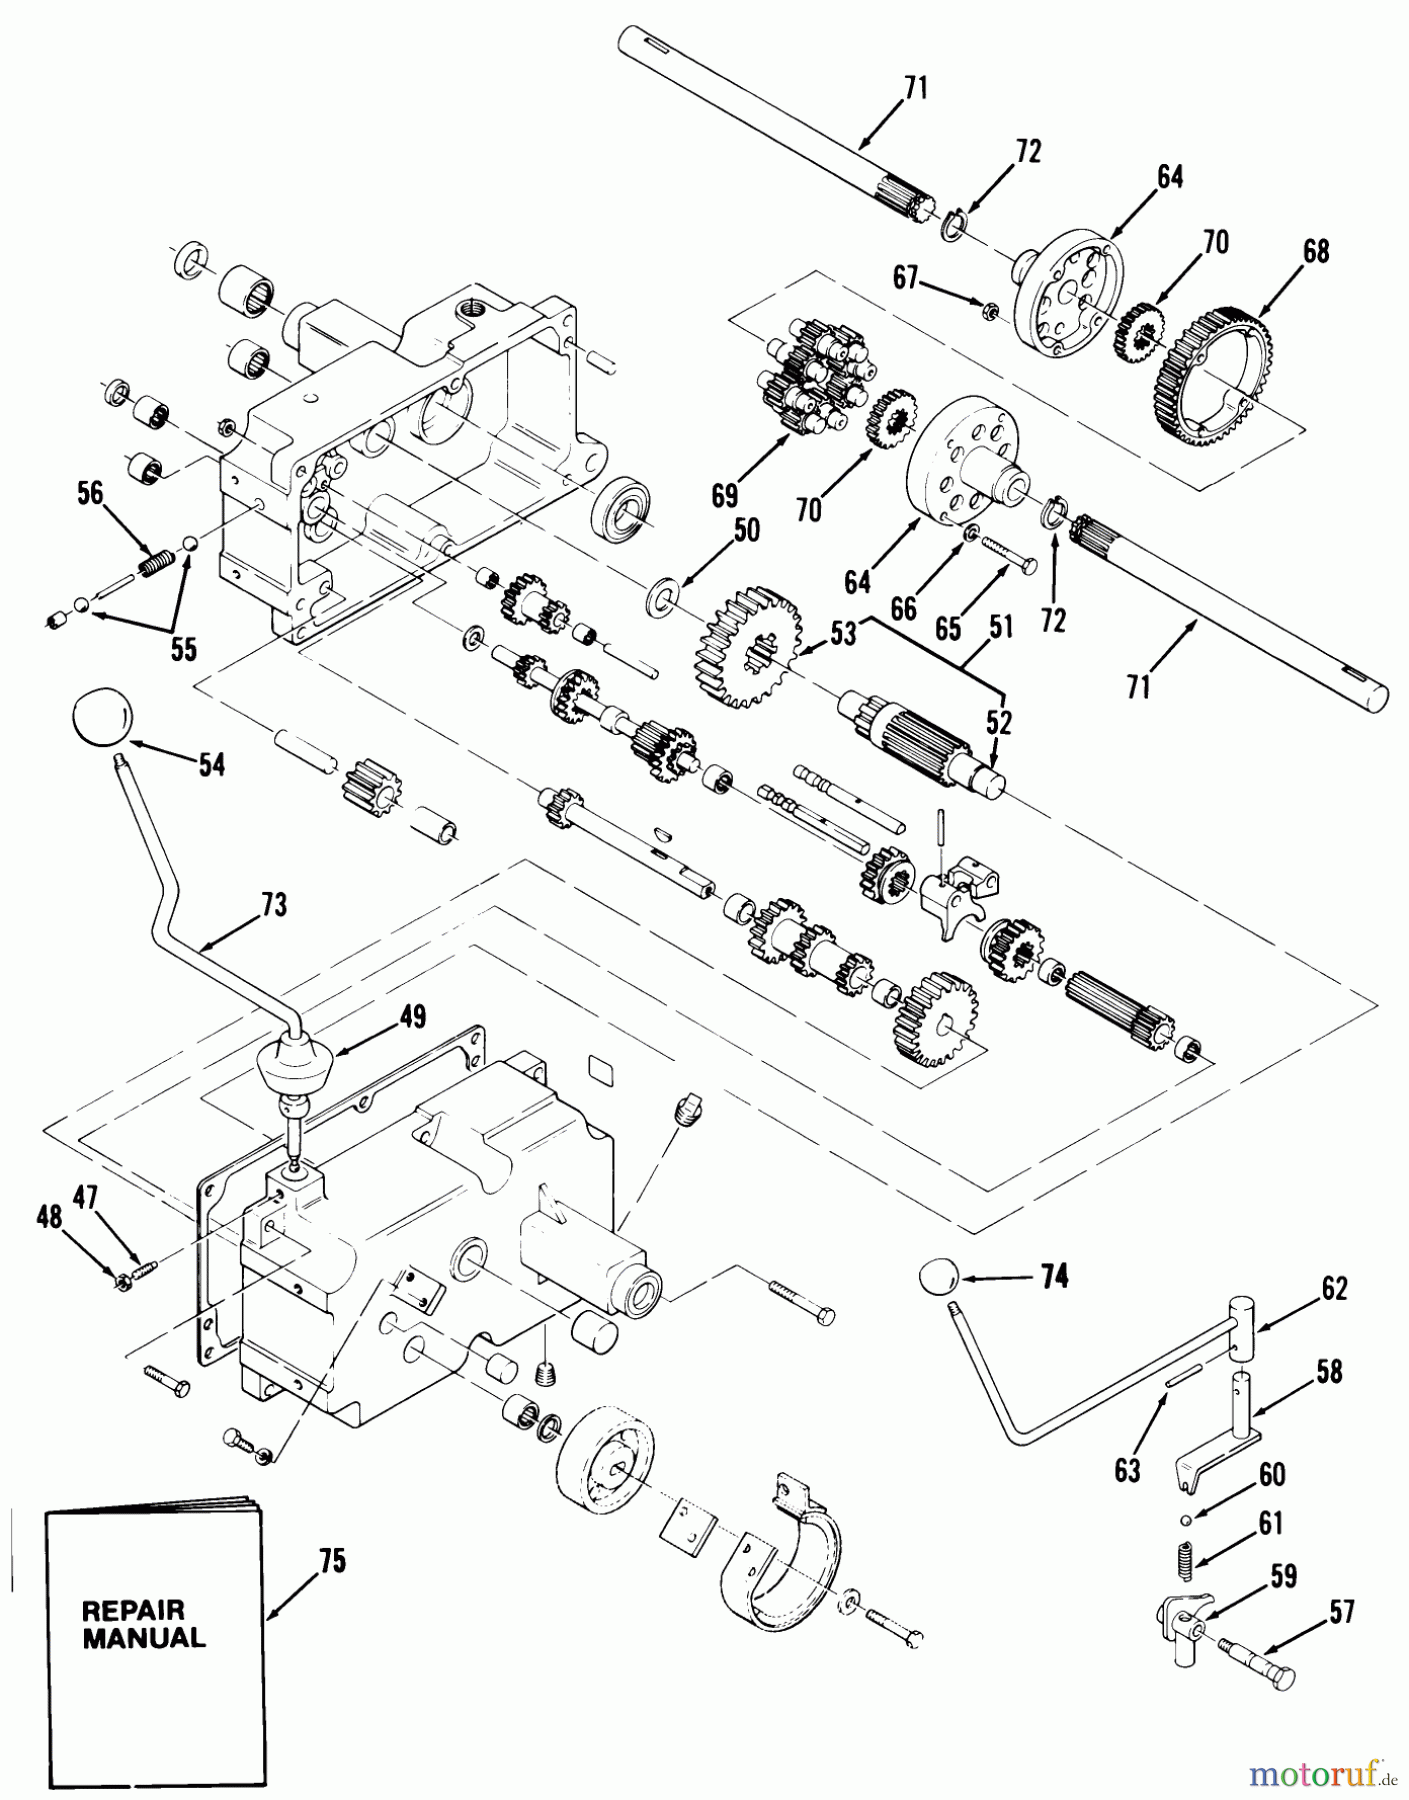  Toro Neu Mowers, Lawn & Garden Tractor Seite 1 11-17KE01 (C-175) - Toro C-175 Twin Automatic Tractor, 1984 MECHANICAL TRANSMISSION-8-SPEED #2